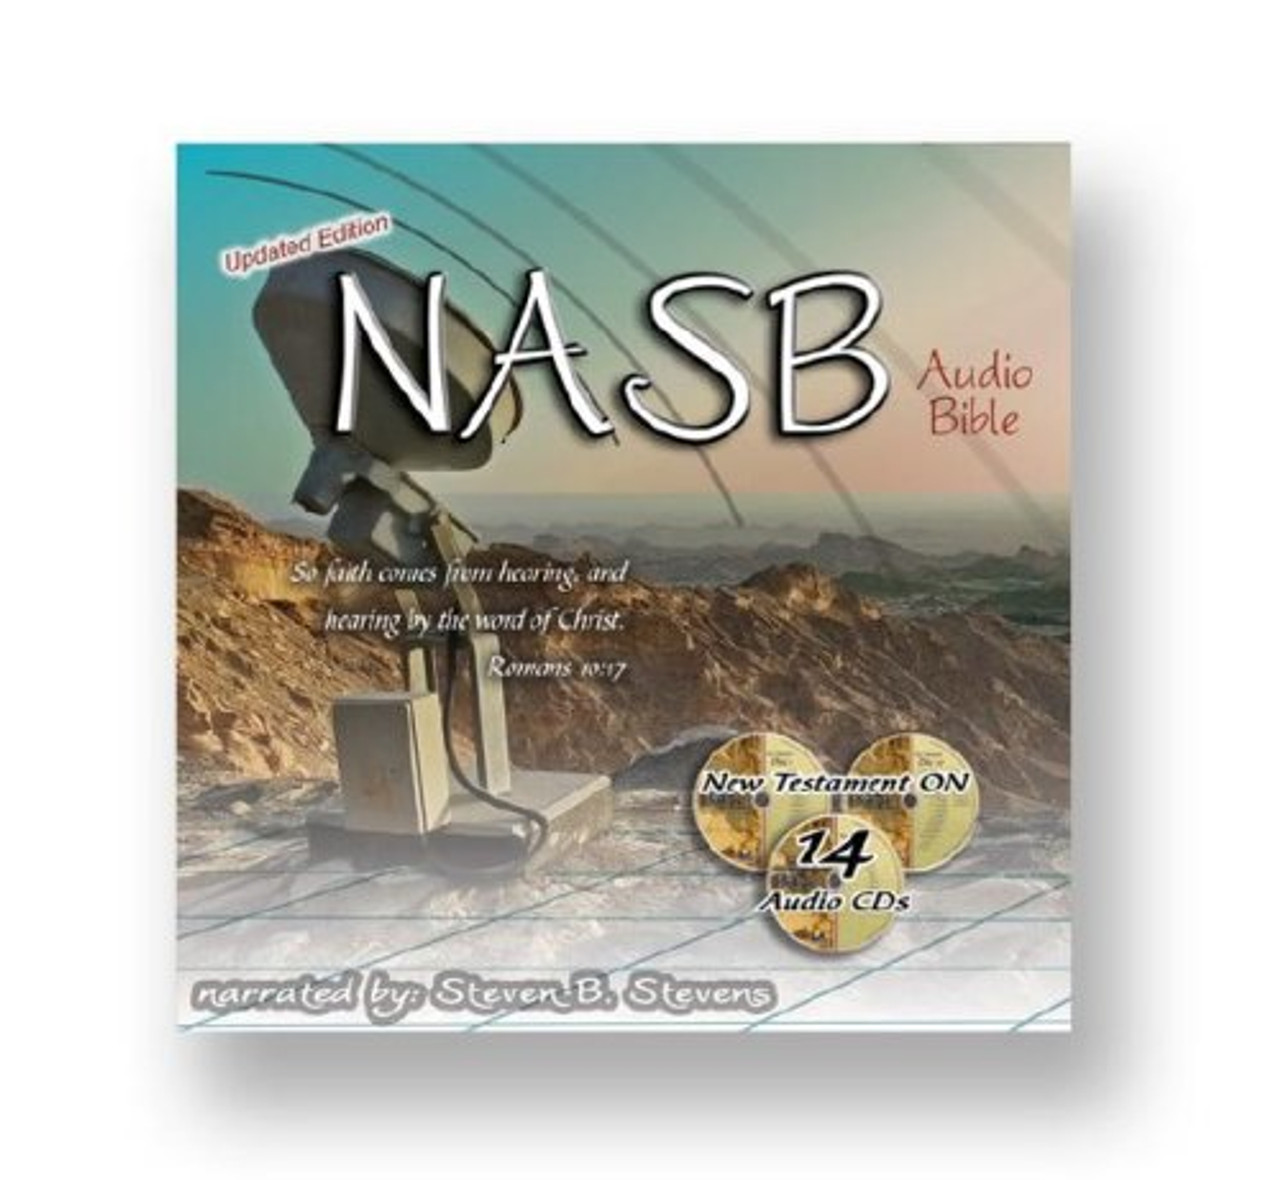 NASB New Testament Bible by Stevens (CD)